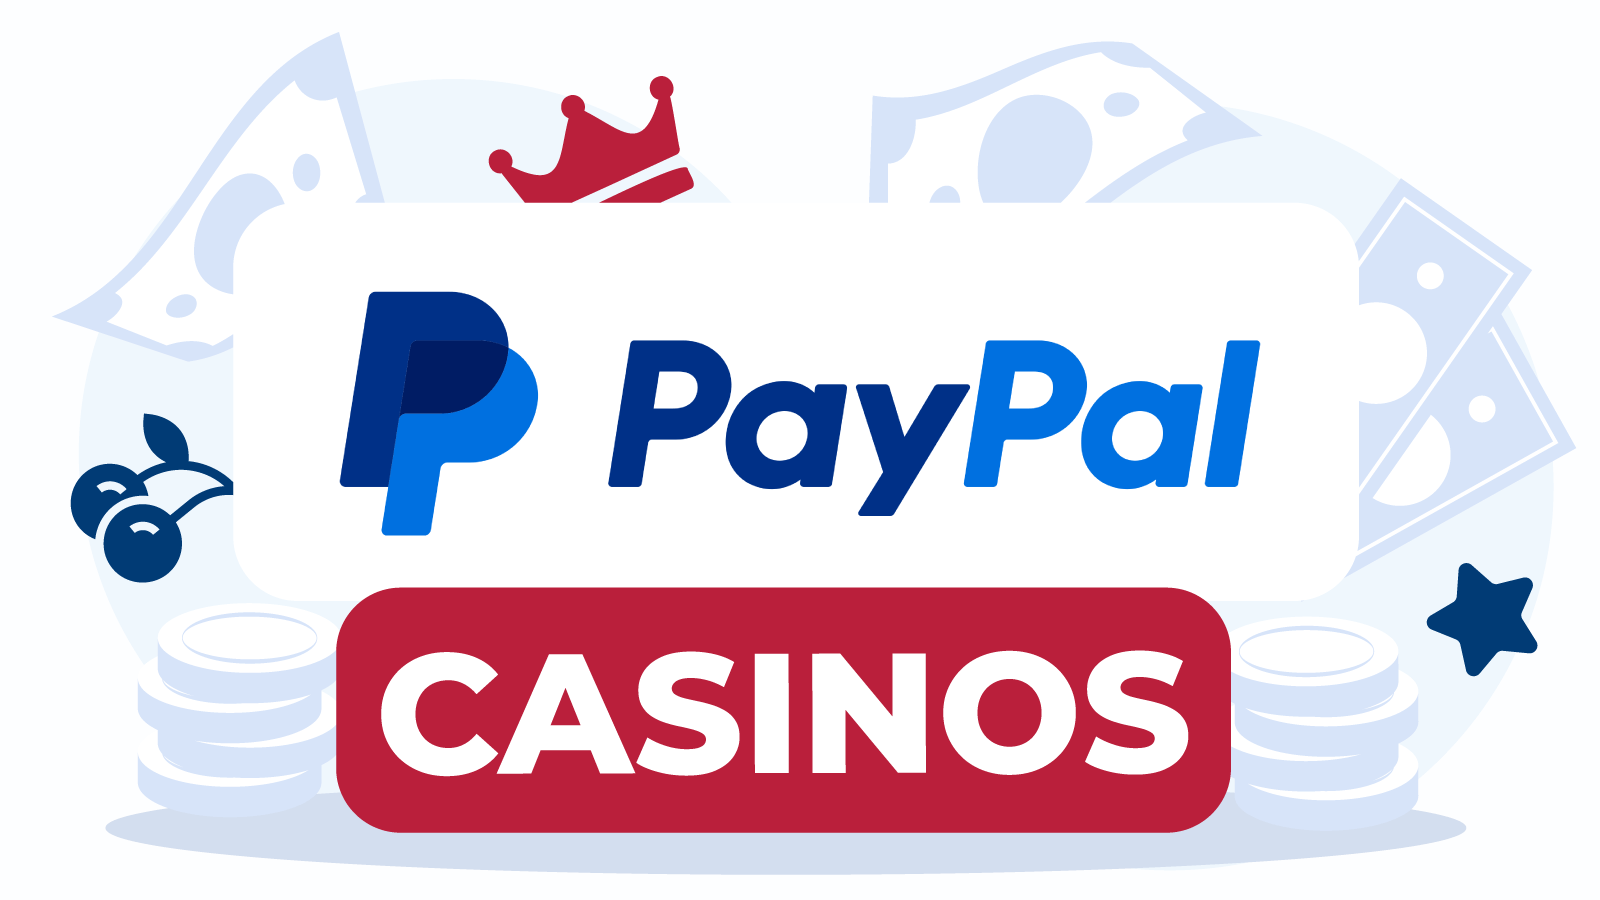 Paypal Casinos